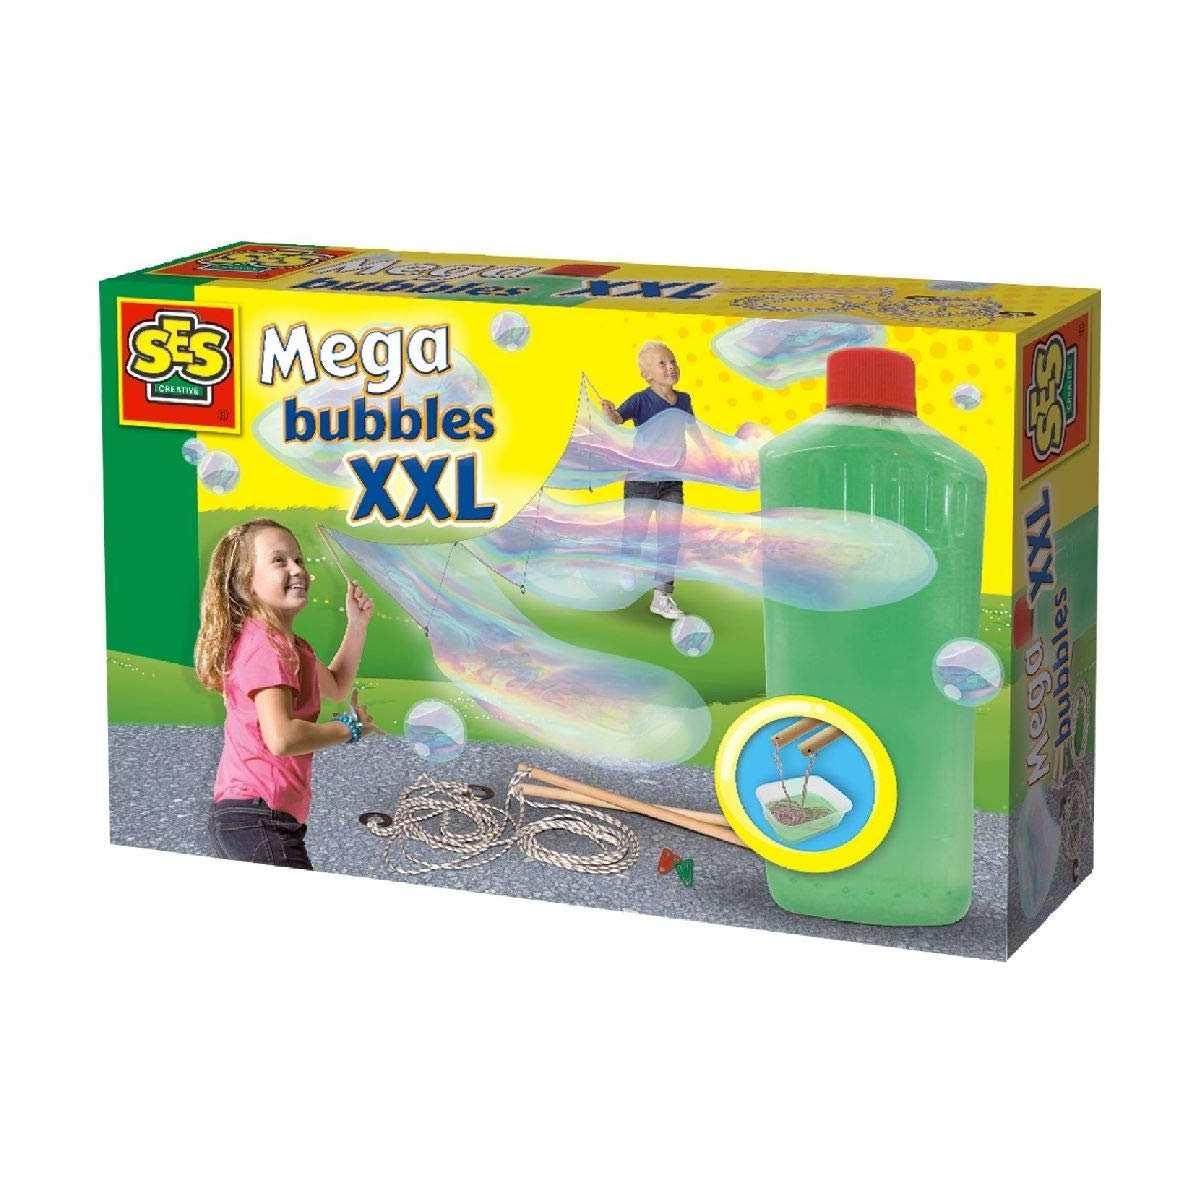 Mega bubbles xxl